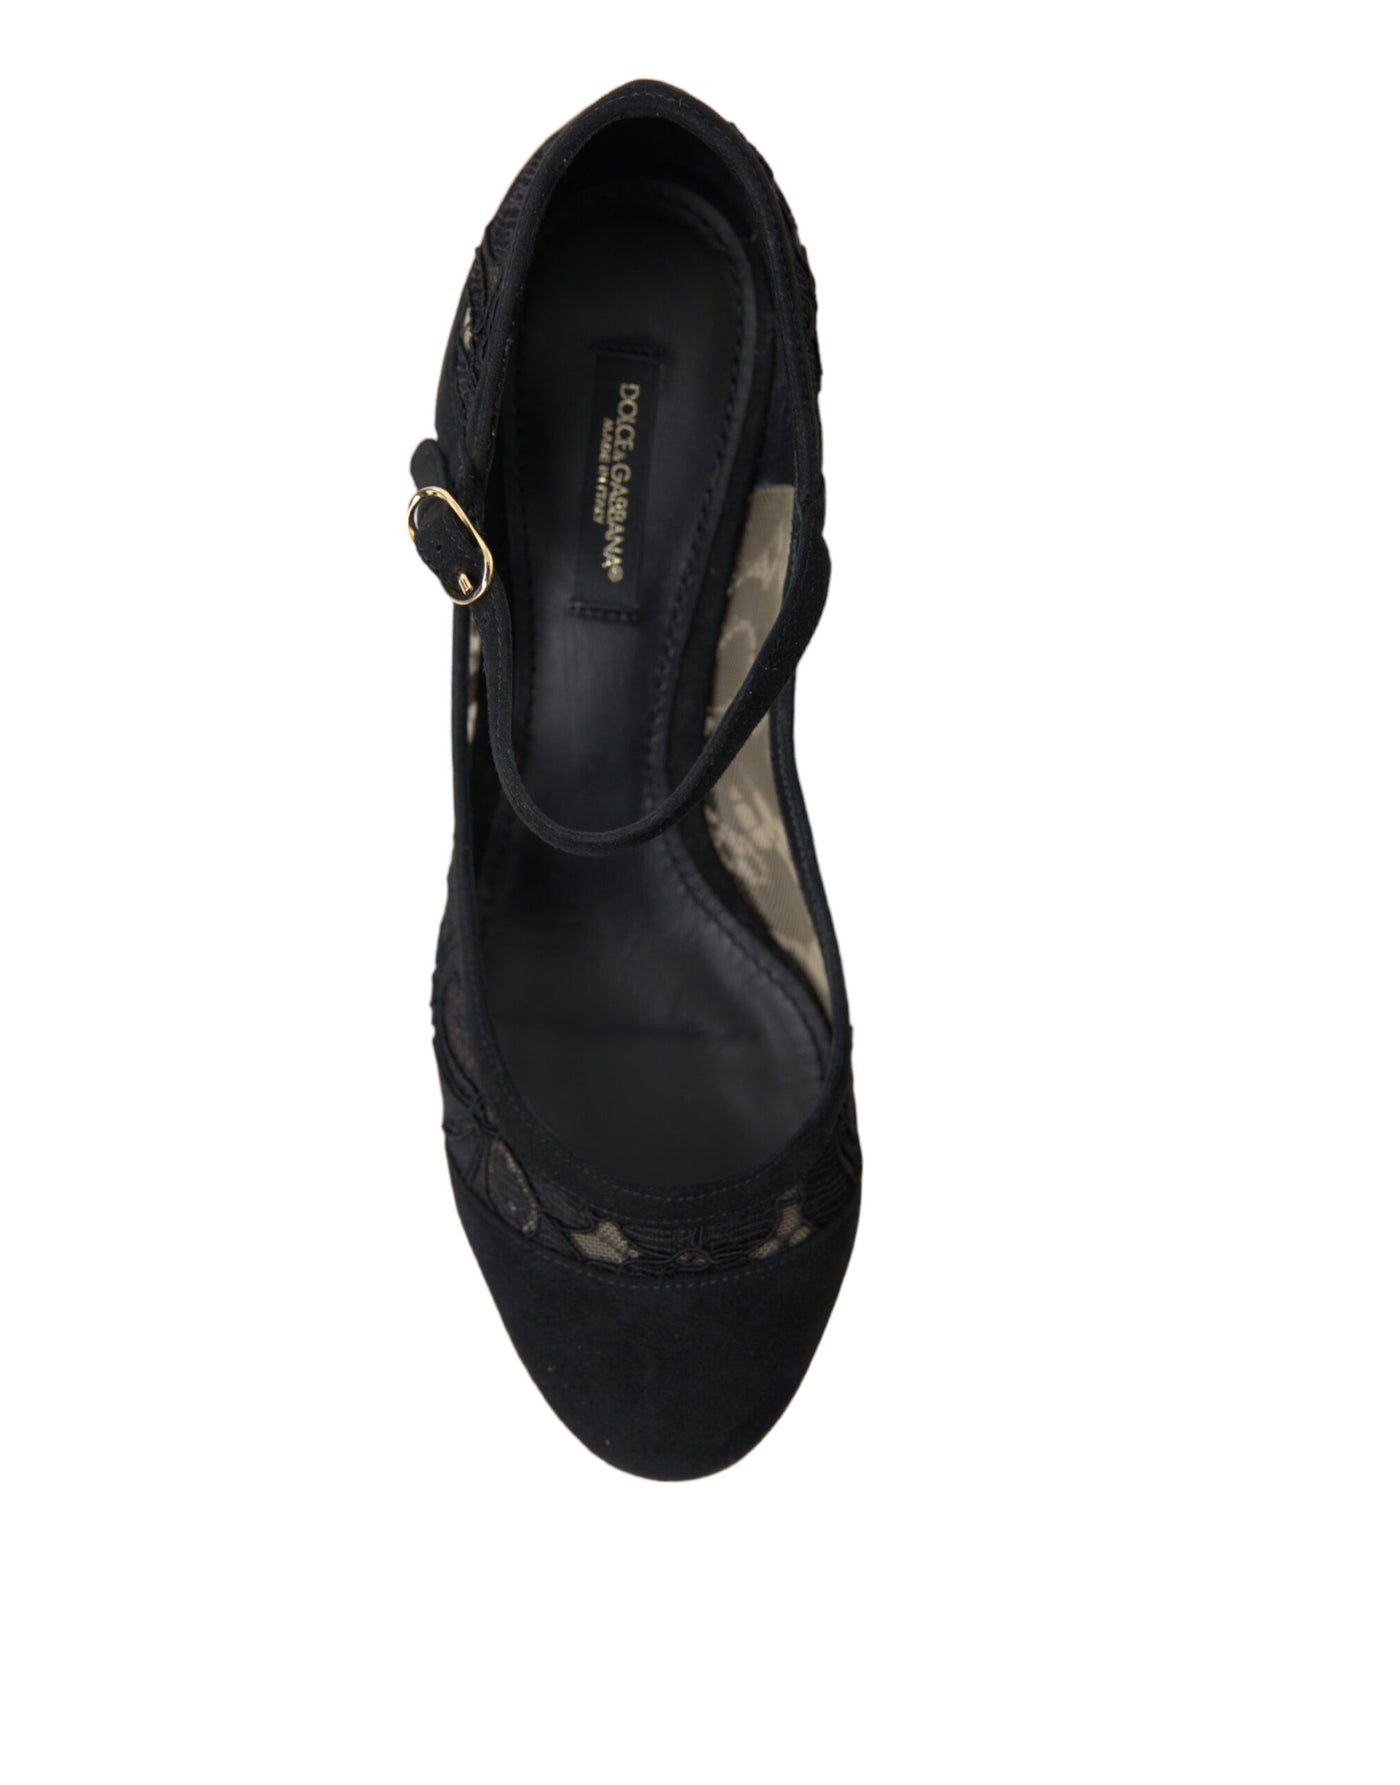 Black Mary Jane Taormina Lace Pumps Shoes